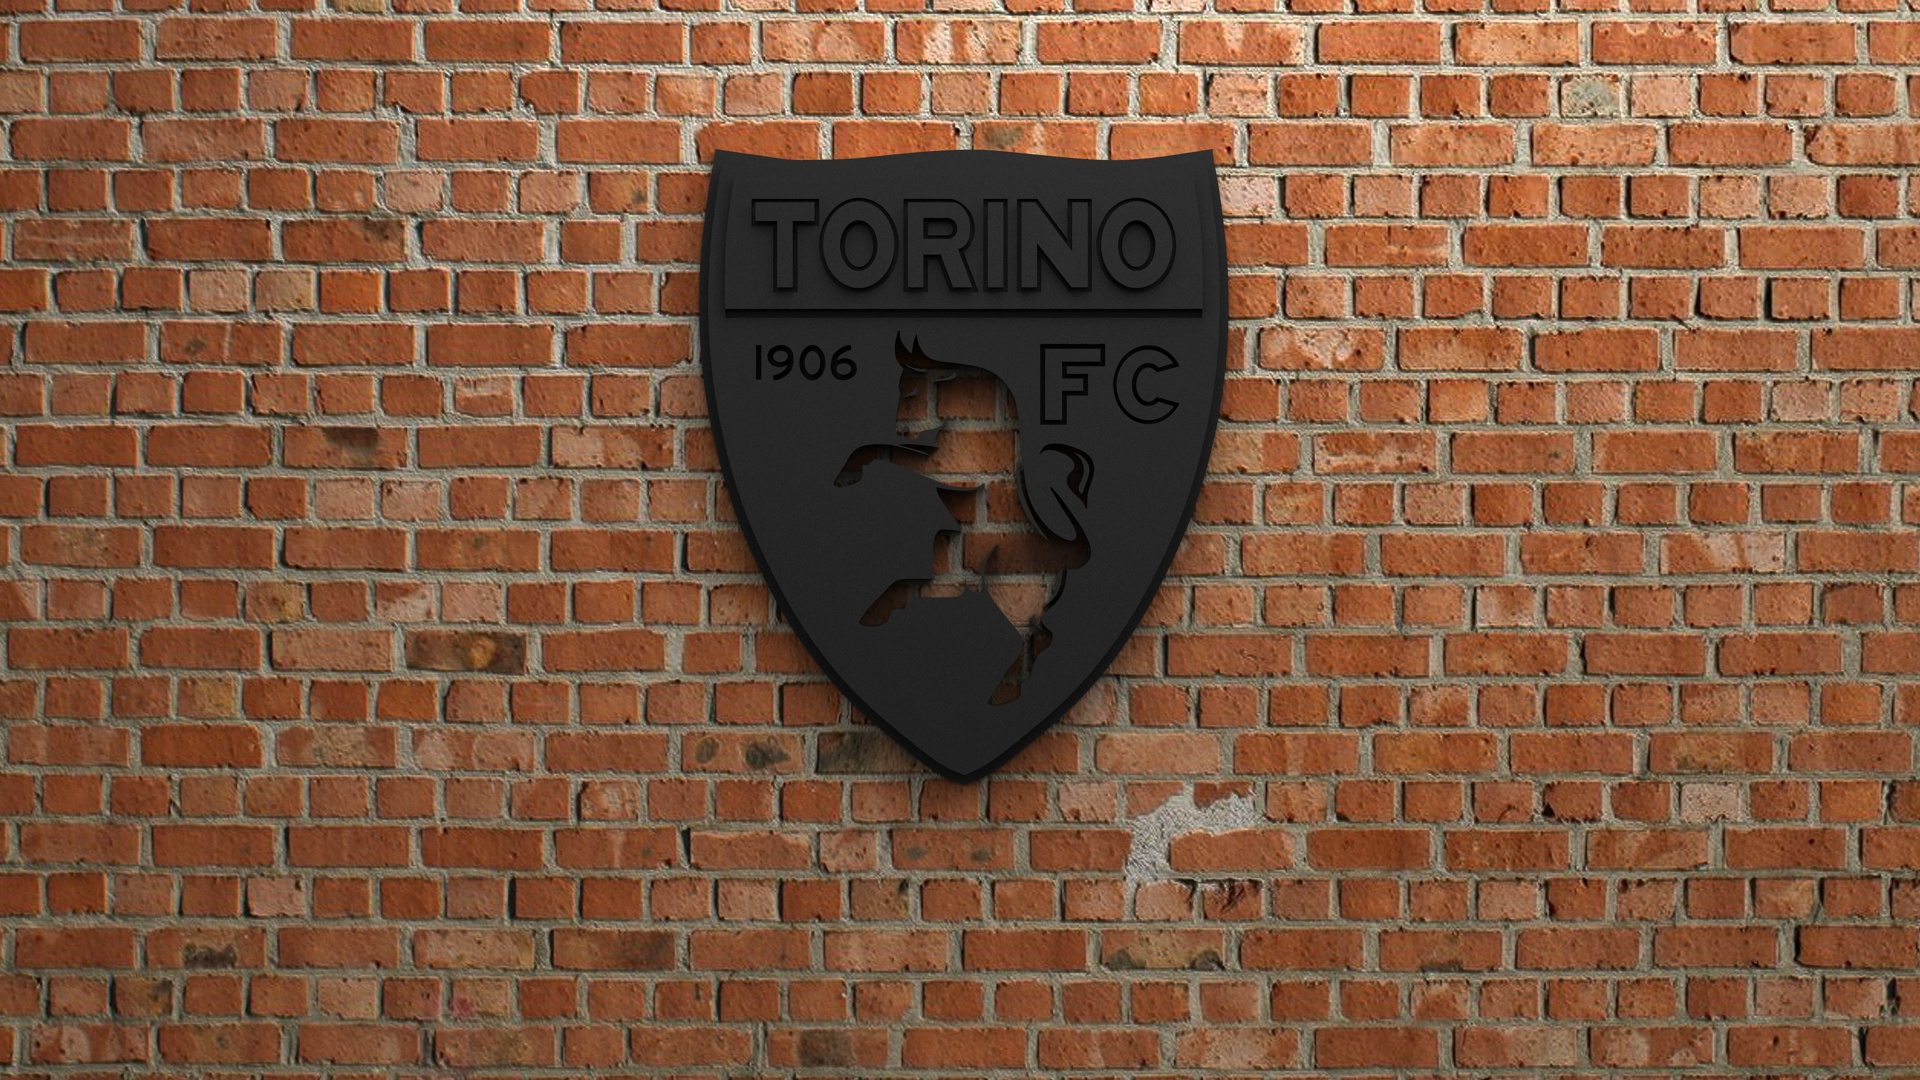 Handy-Wallpaper Sport, Fußball, Logo, Emblem, Fc Turin kostenlos herunterladen.